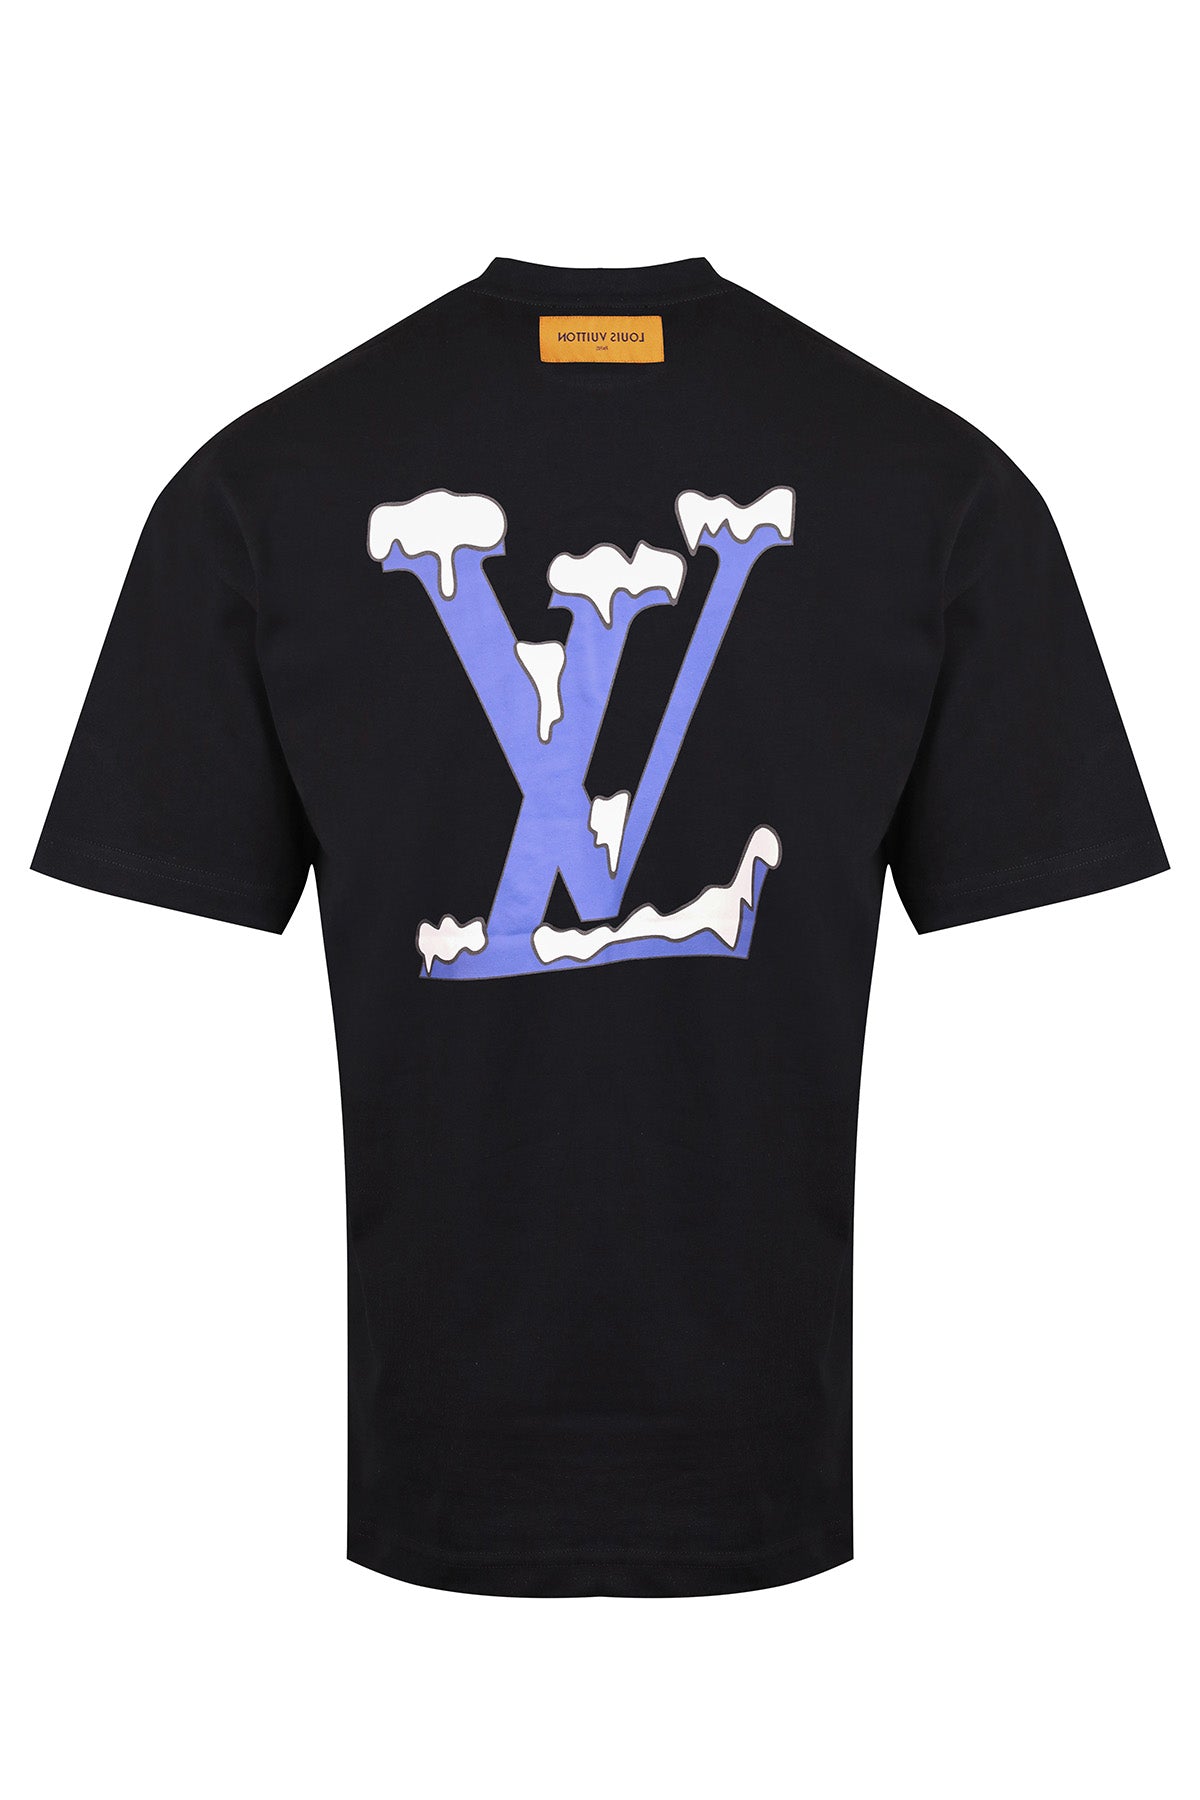 Do A Kickflip Louis Vuitton Shirt - High-Quality Printed Brand